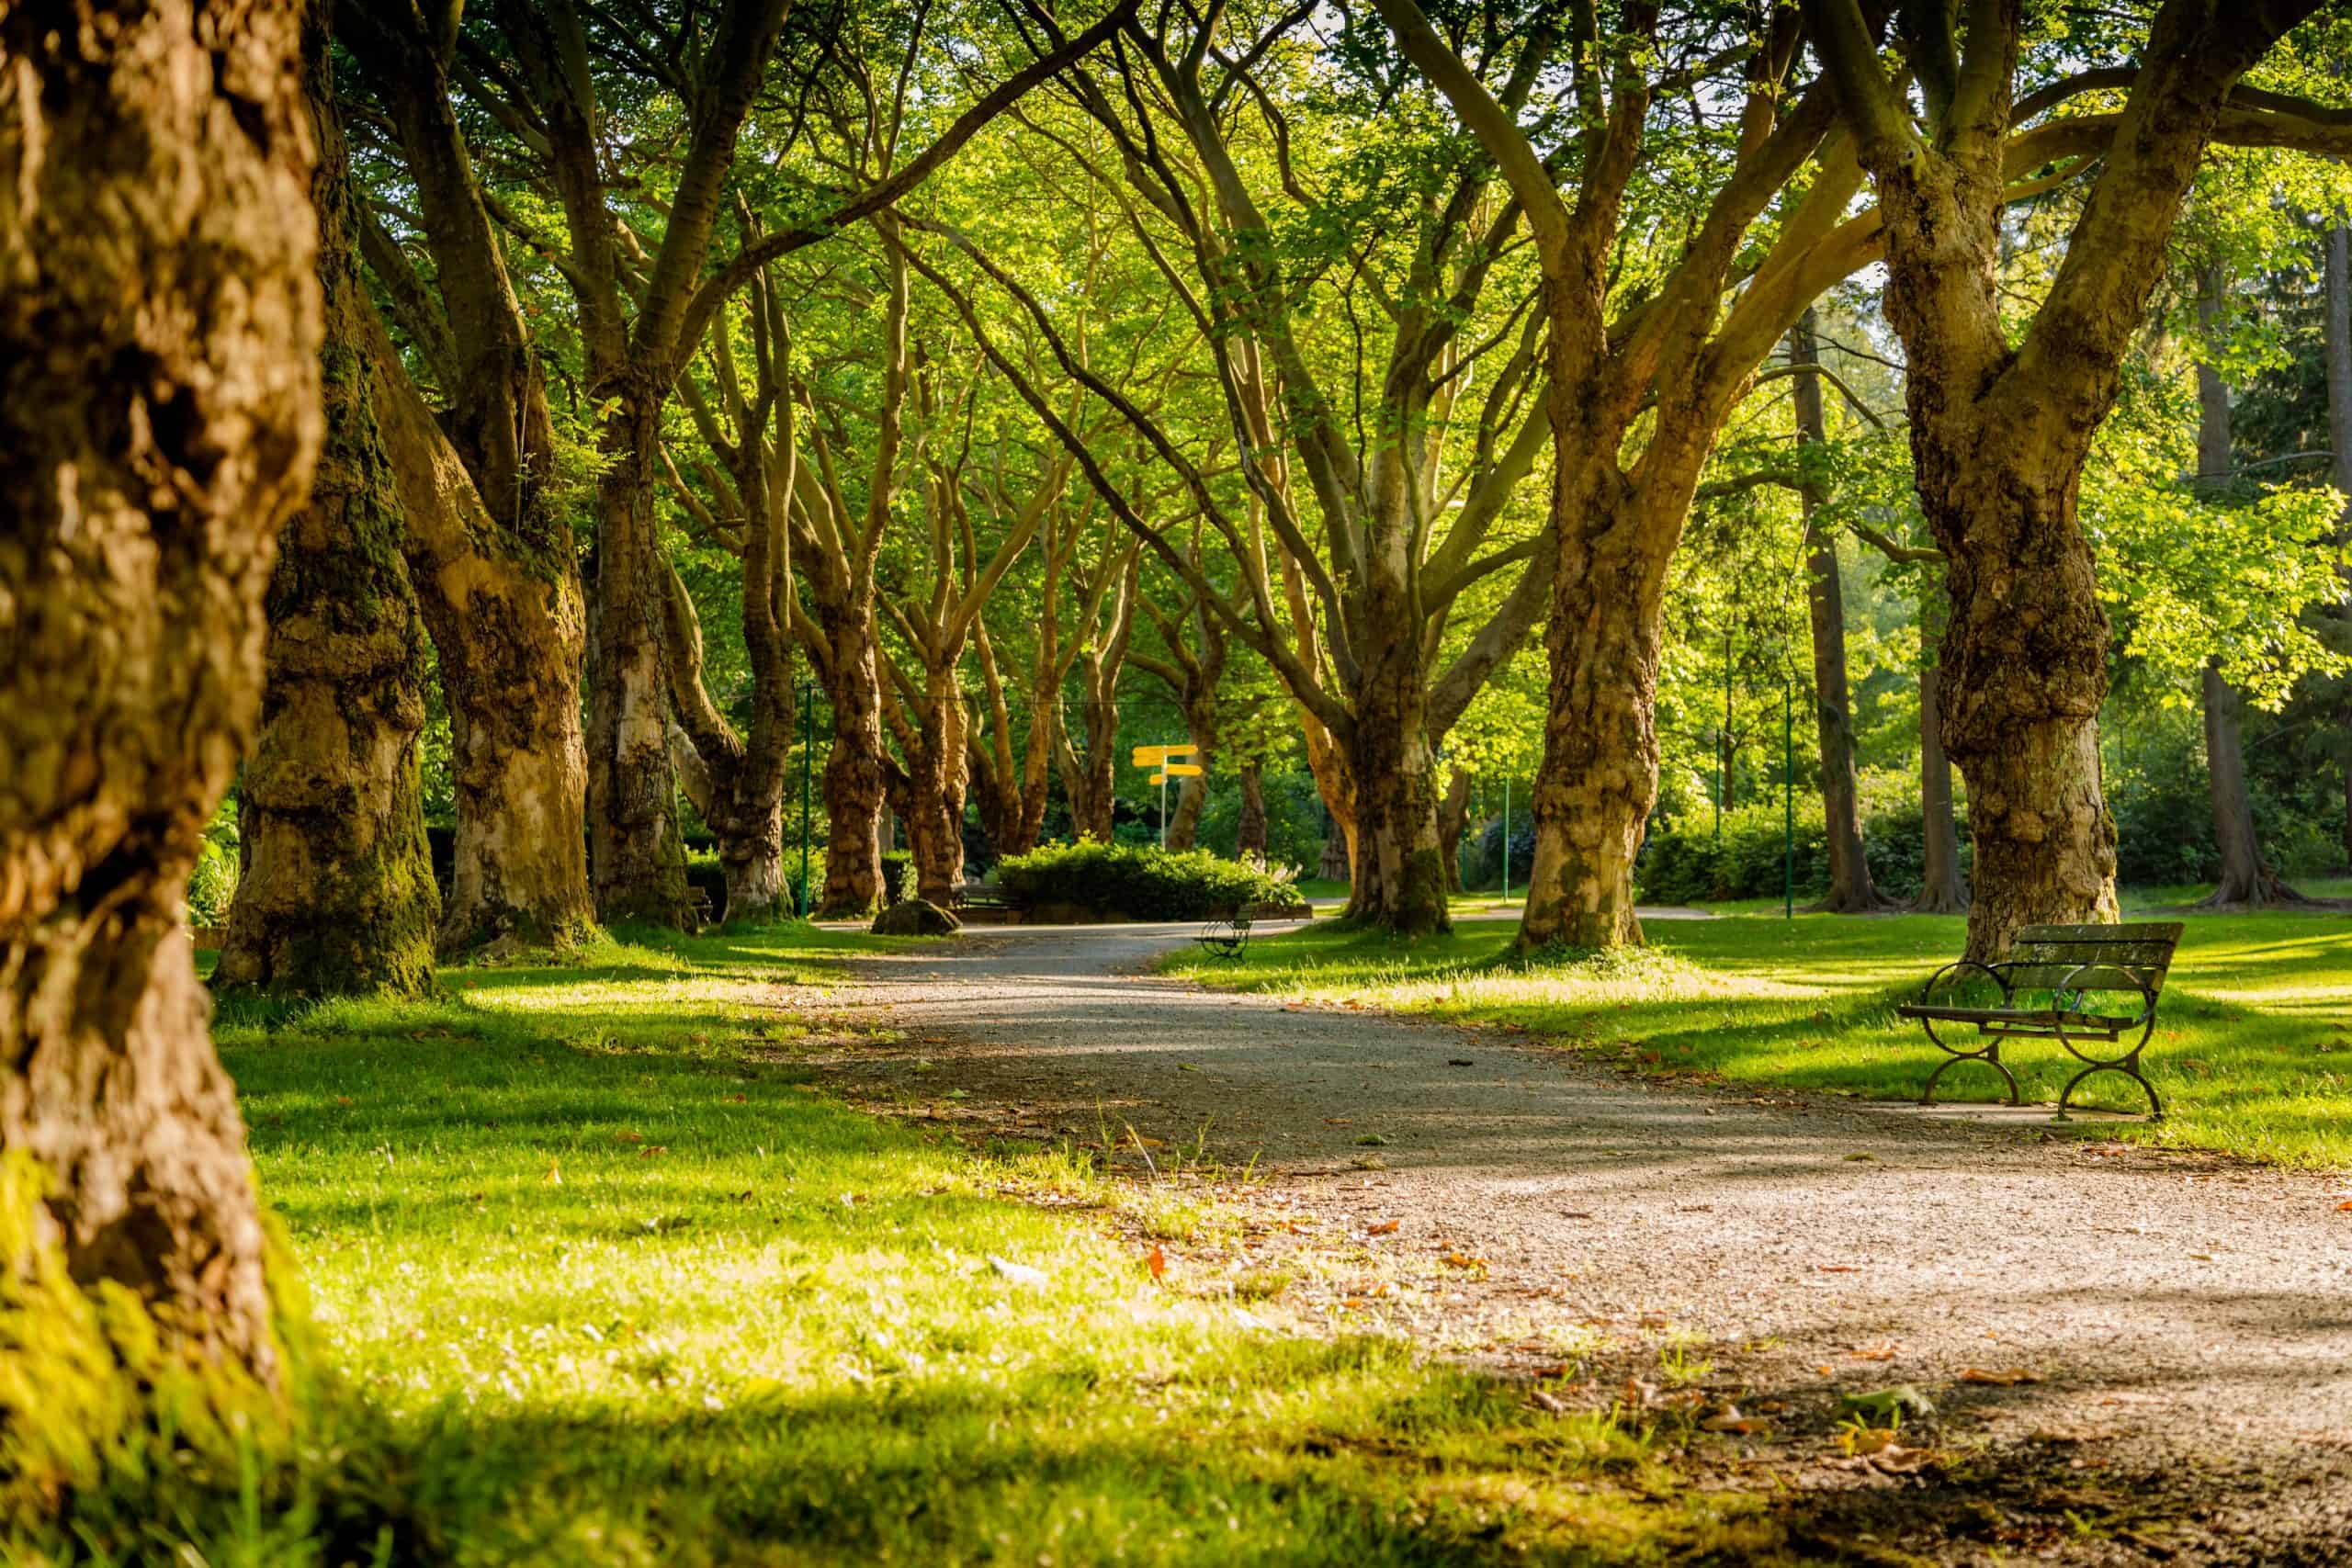 A path leading through trees